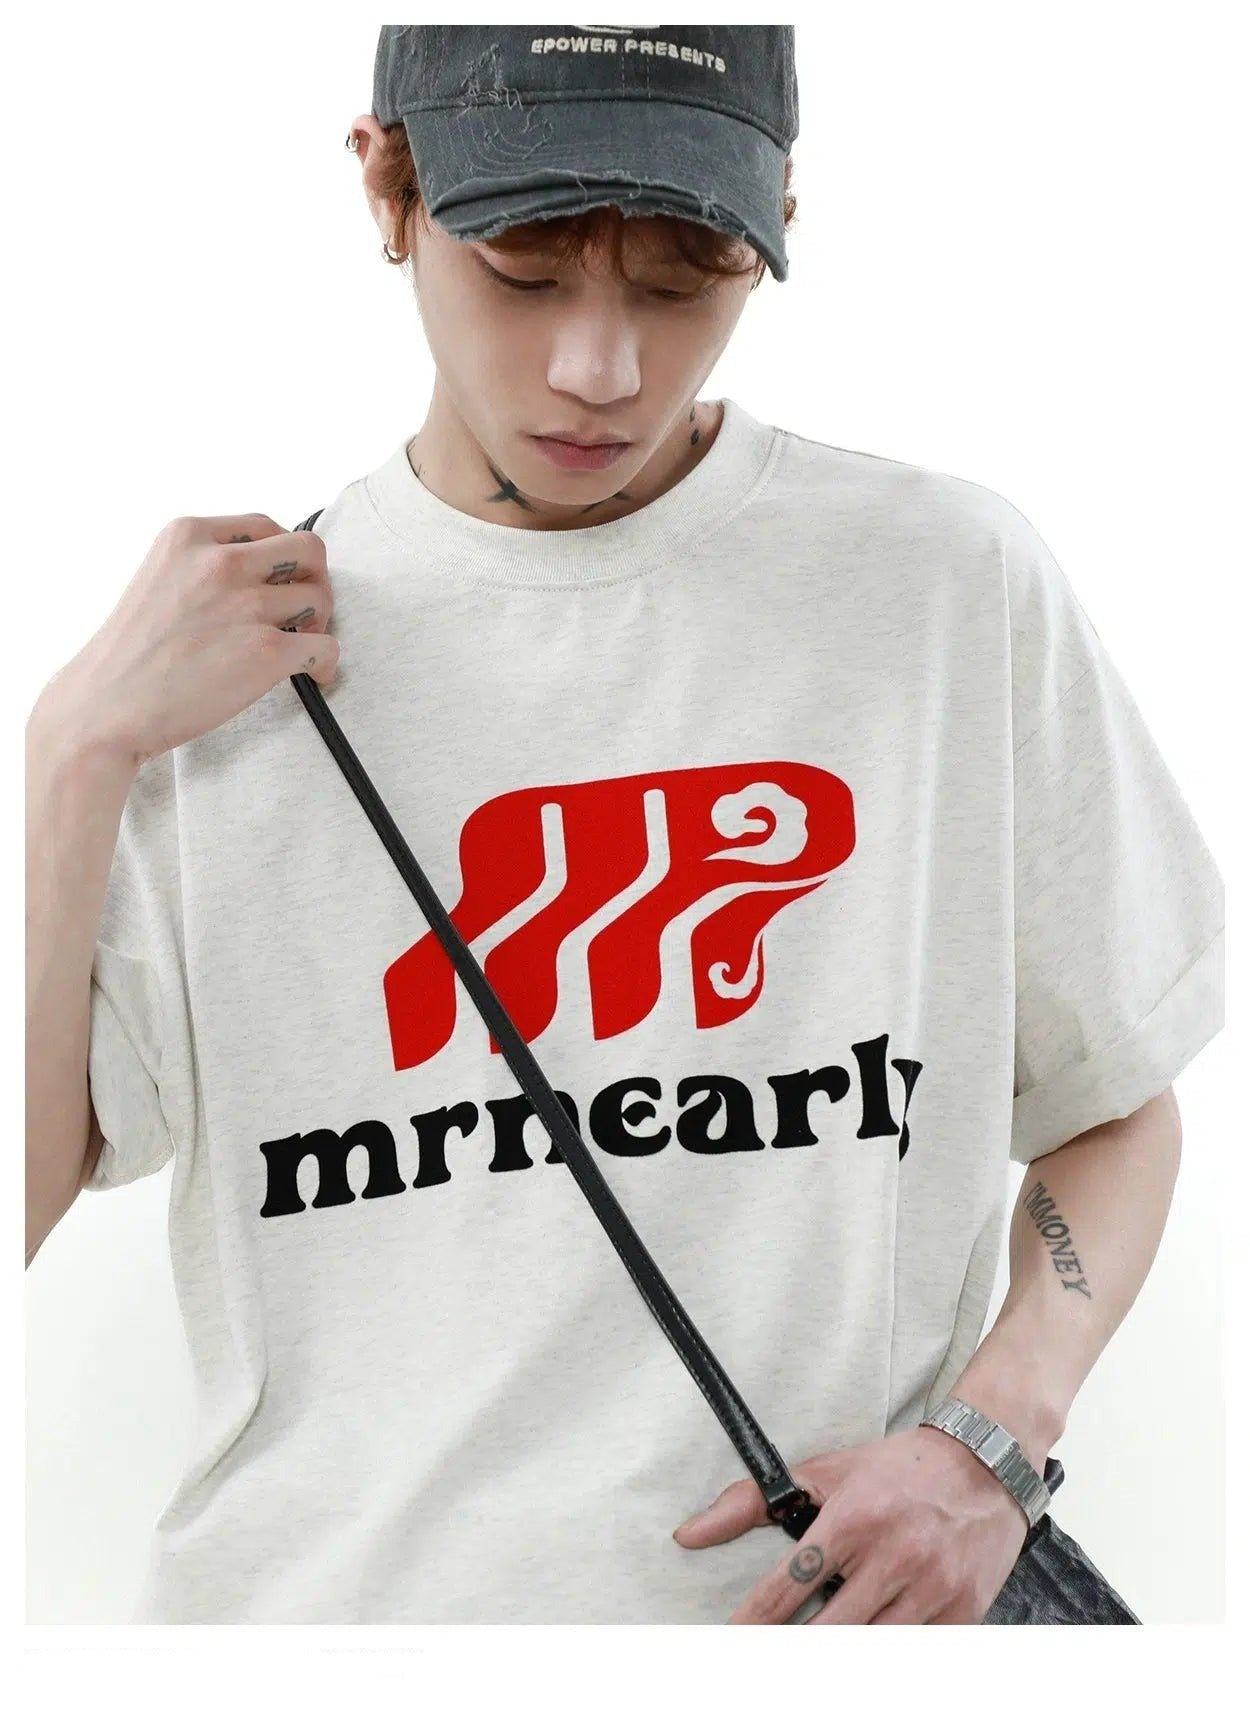 Basic Logo Print T-Shirt Korean Street Fashion T-Shirt By Mr Nearly Shop Online at OH Vault